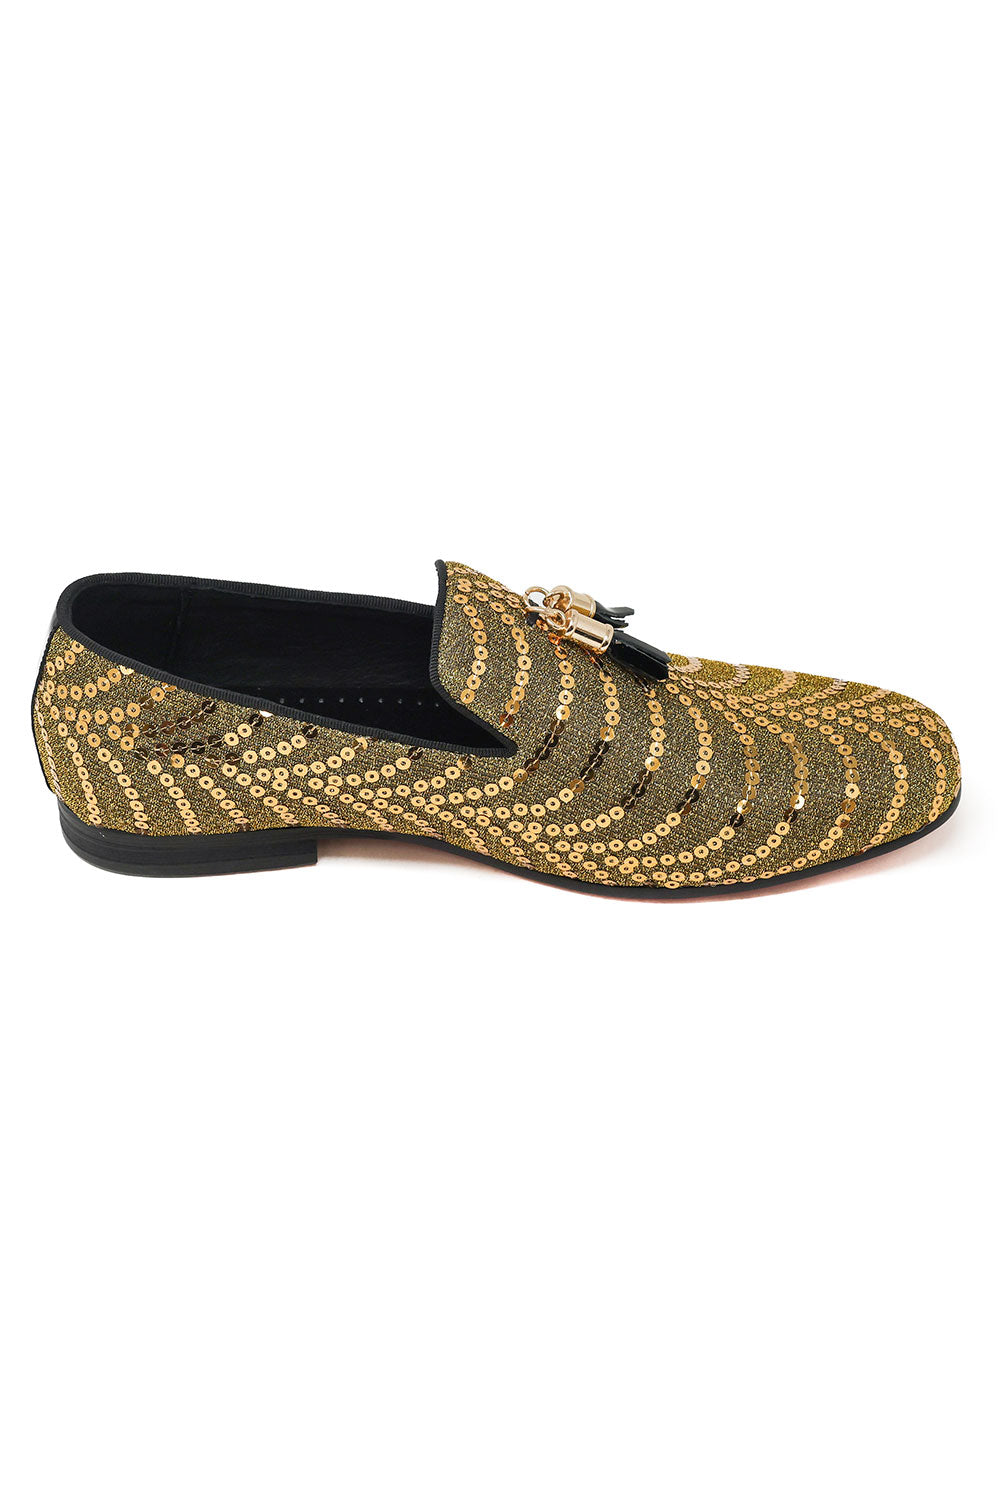 Barabas Men's Sequin Design Tassel Slip On Loafer Shoes 2SHR8 Gold